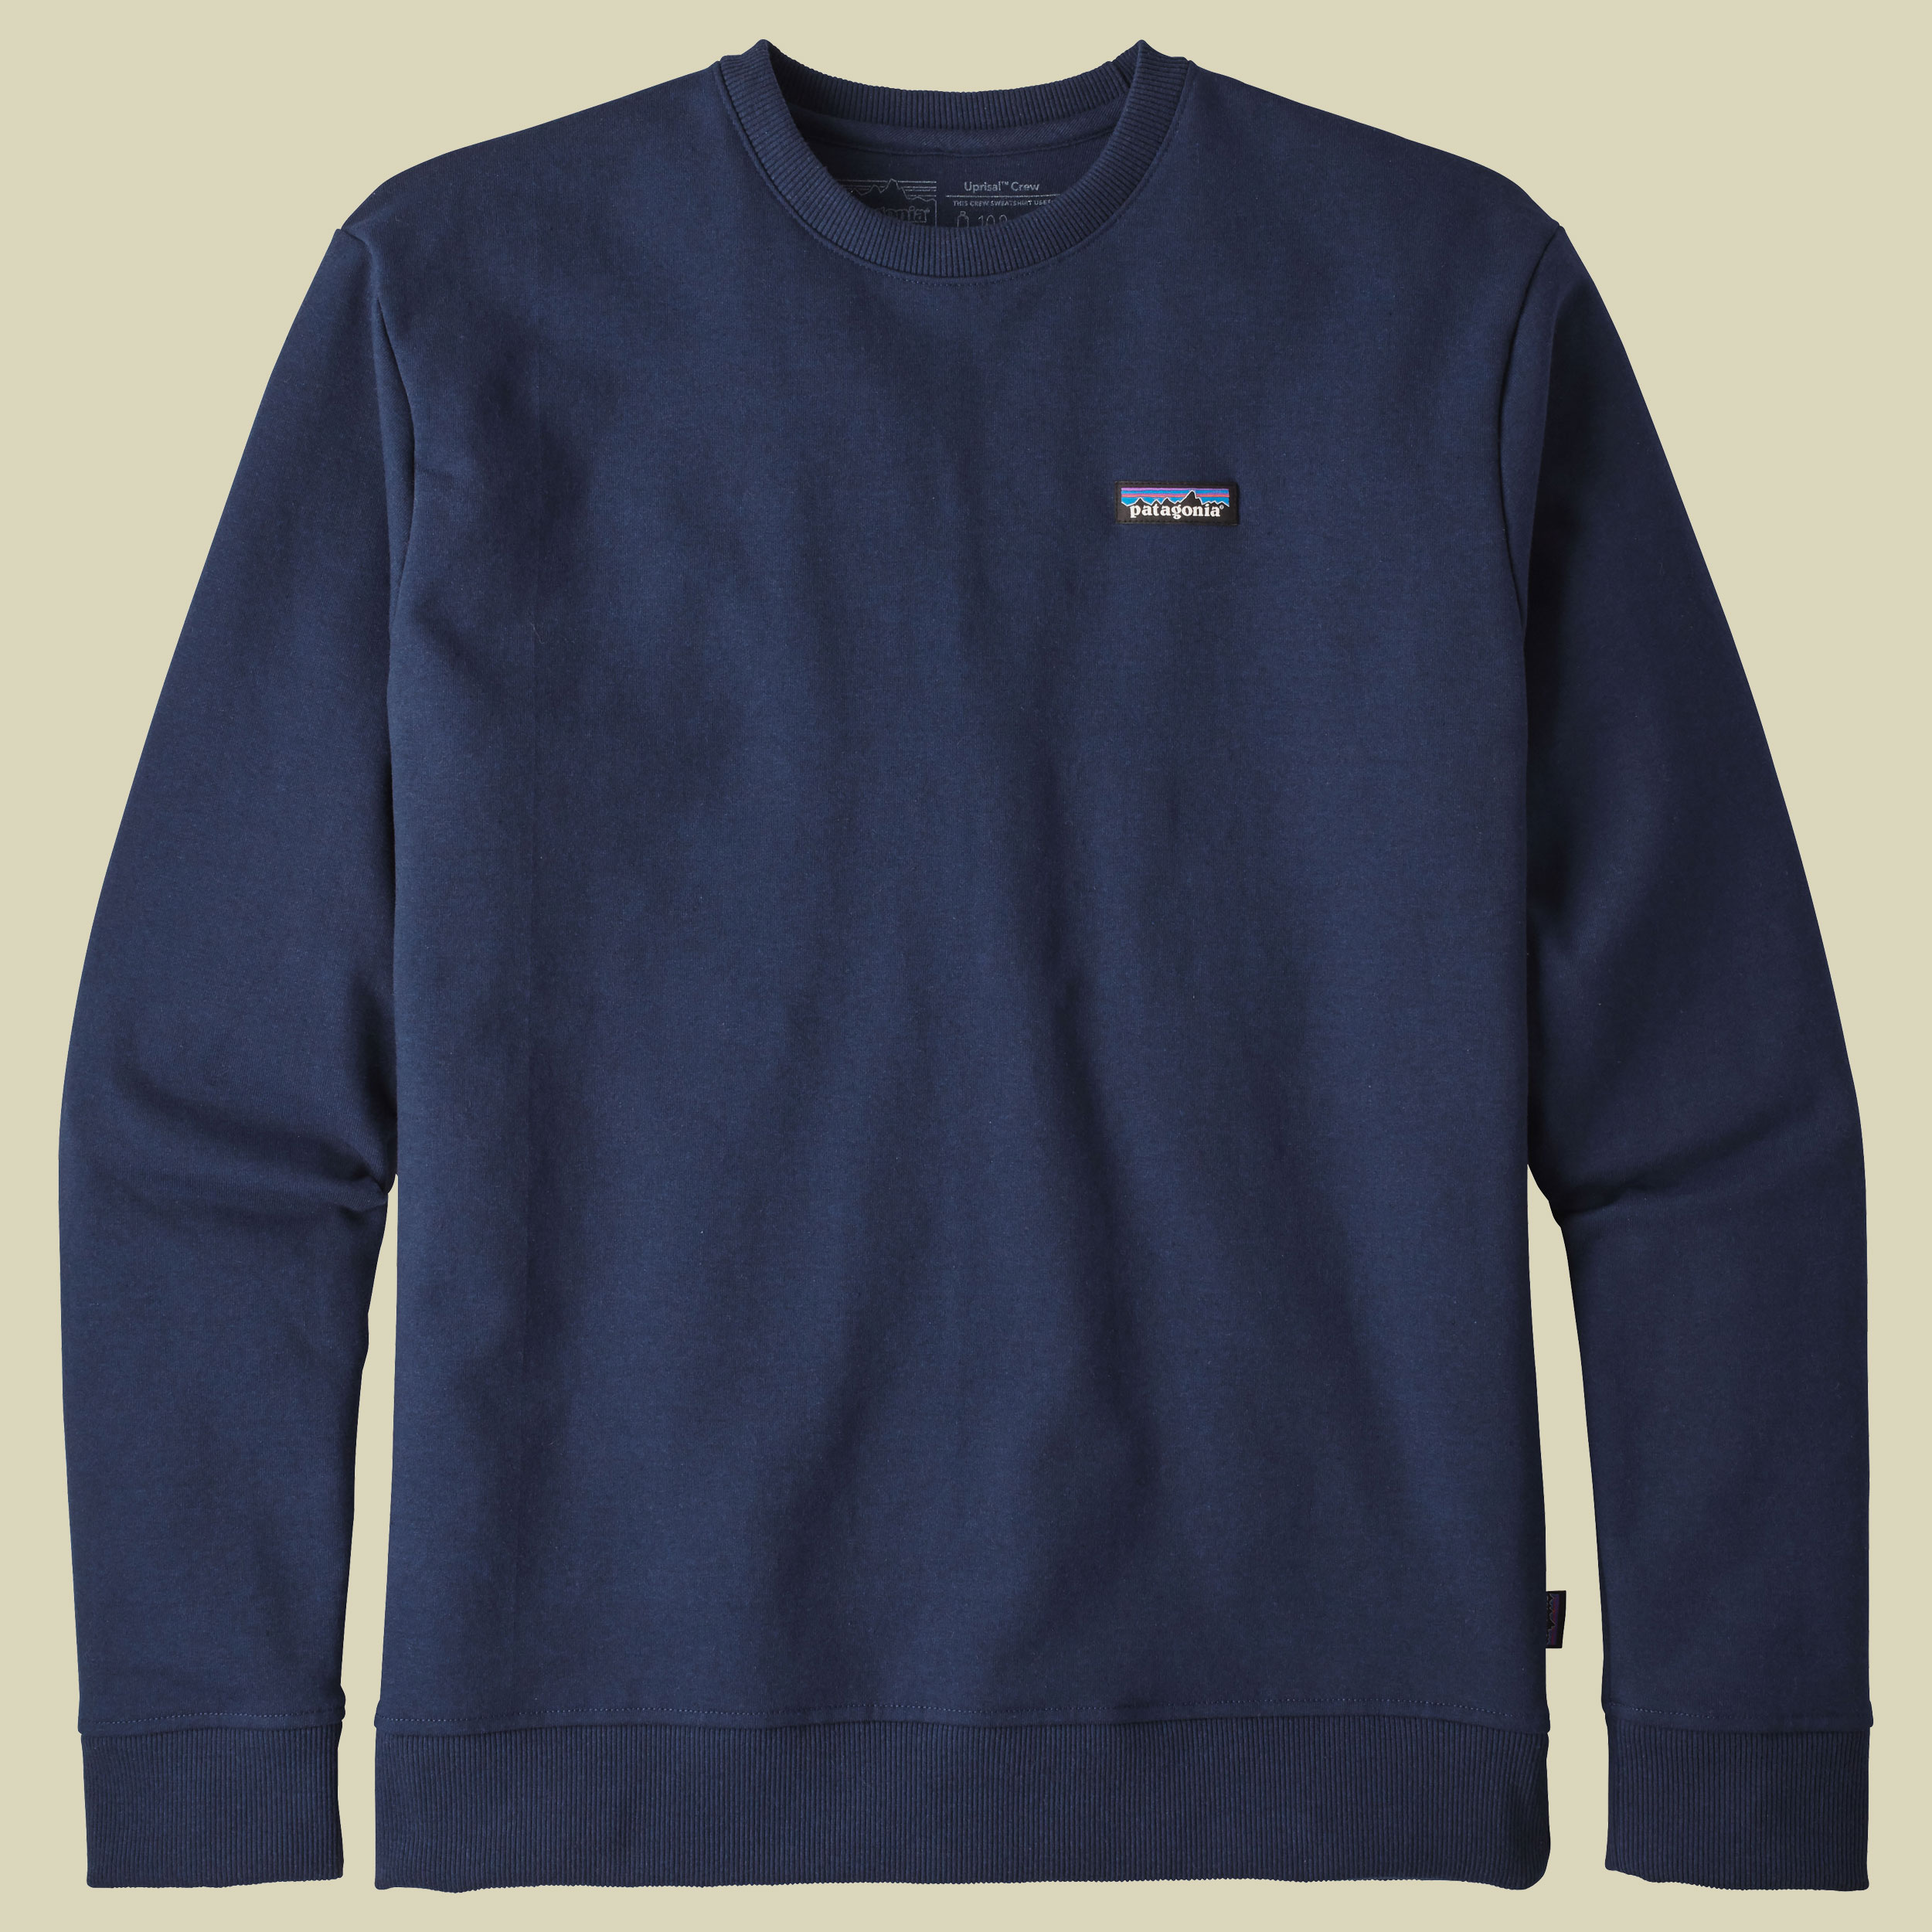 P-6 Label Uprisal Crew Sweatshirt Men Größe L Farbe classic navy